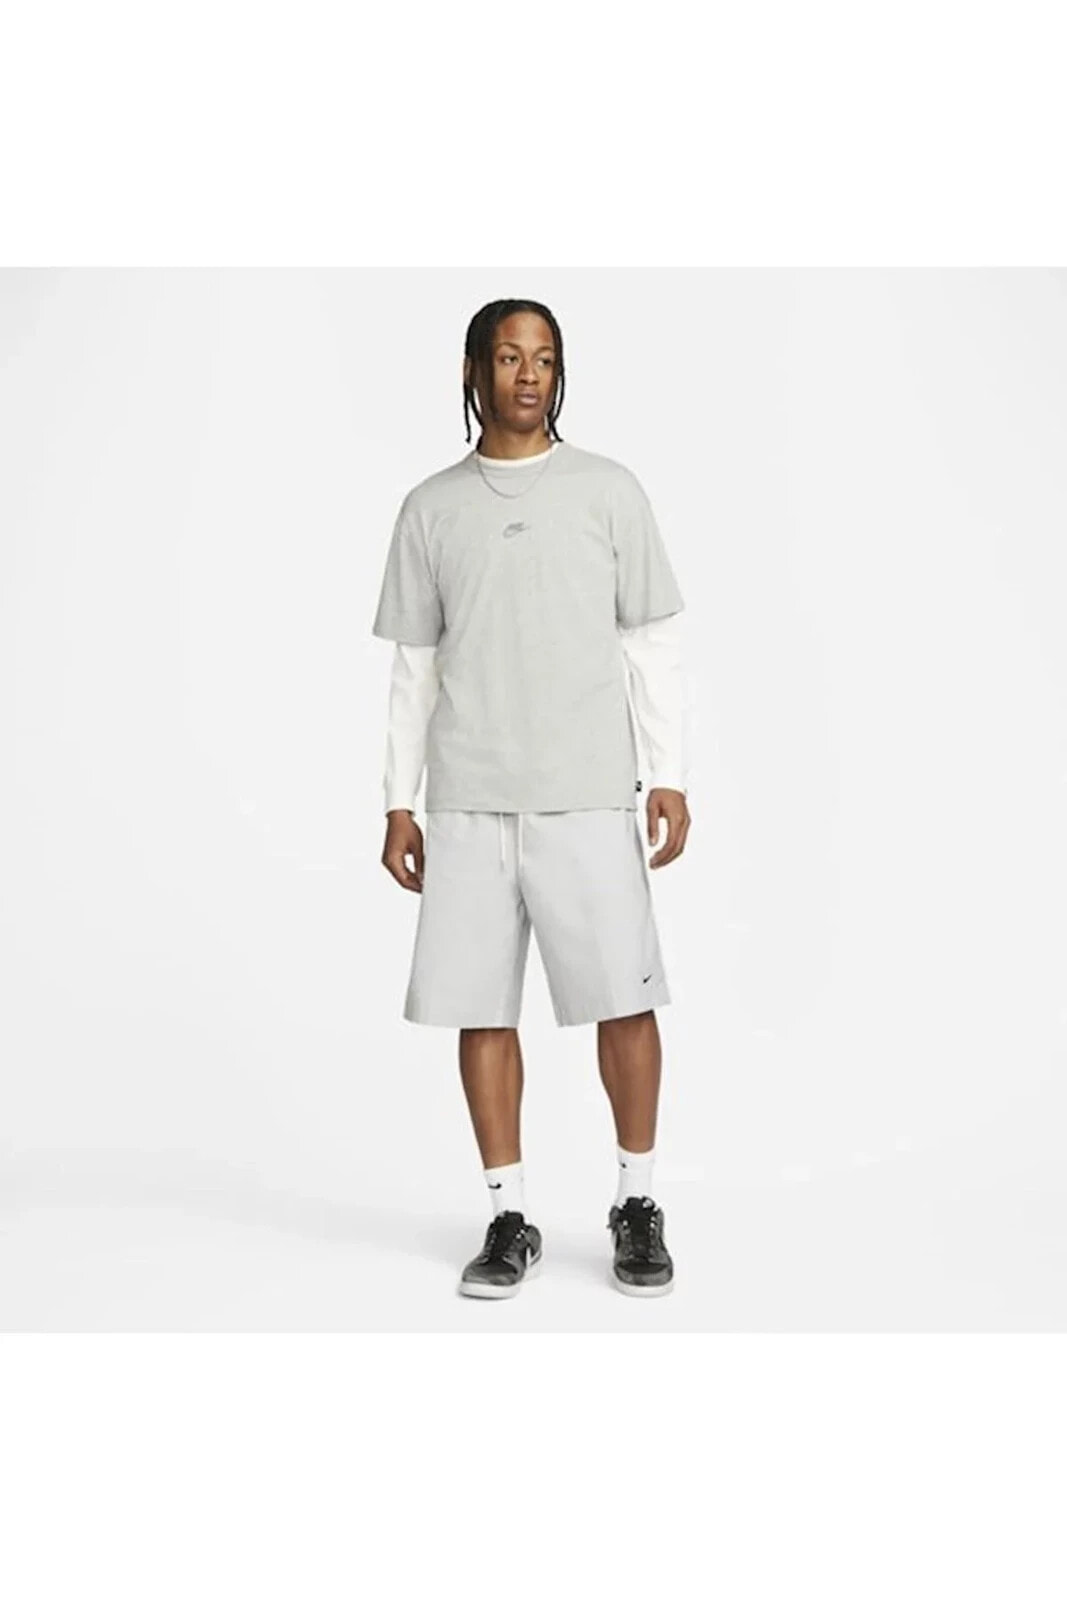 Sportswear Style Essentials Men's Woven Oversized Shorts - Grey